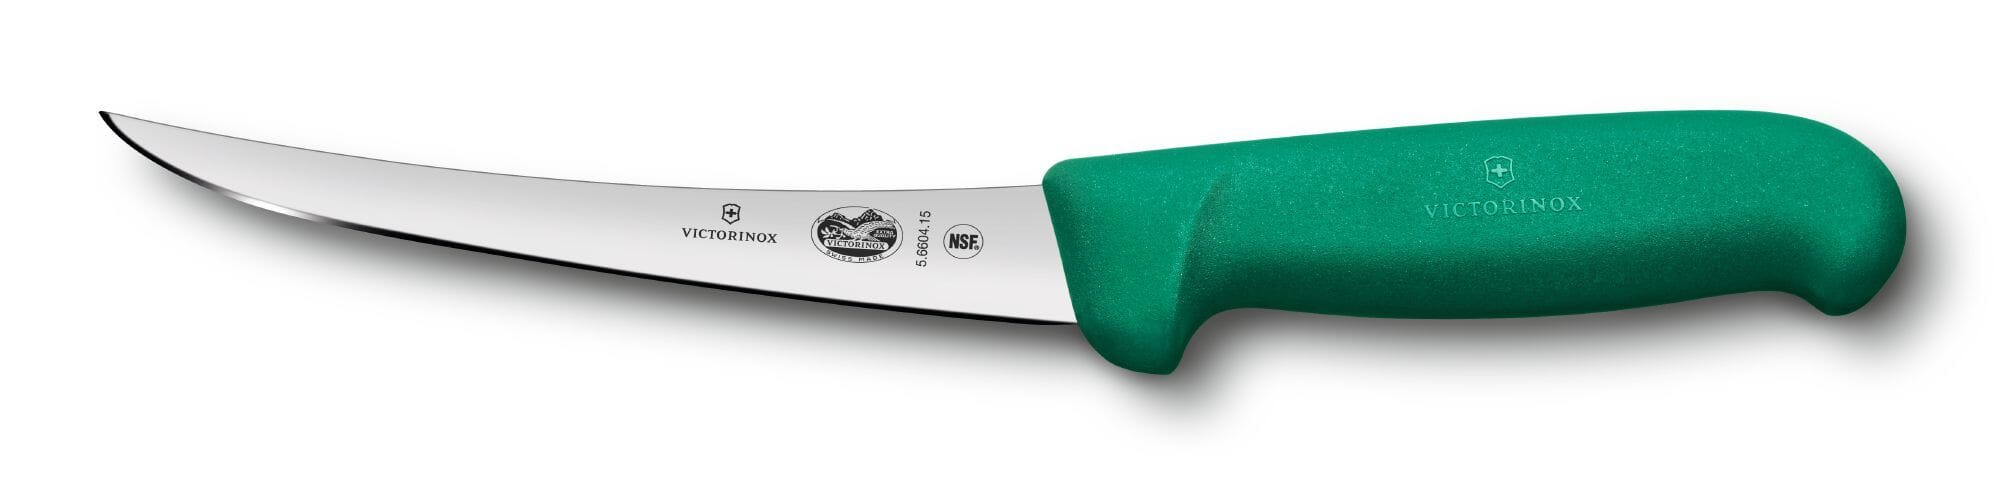 Victorinox Boning Knife 5.6604.15cm Curved Blade Green Handle